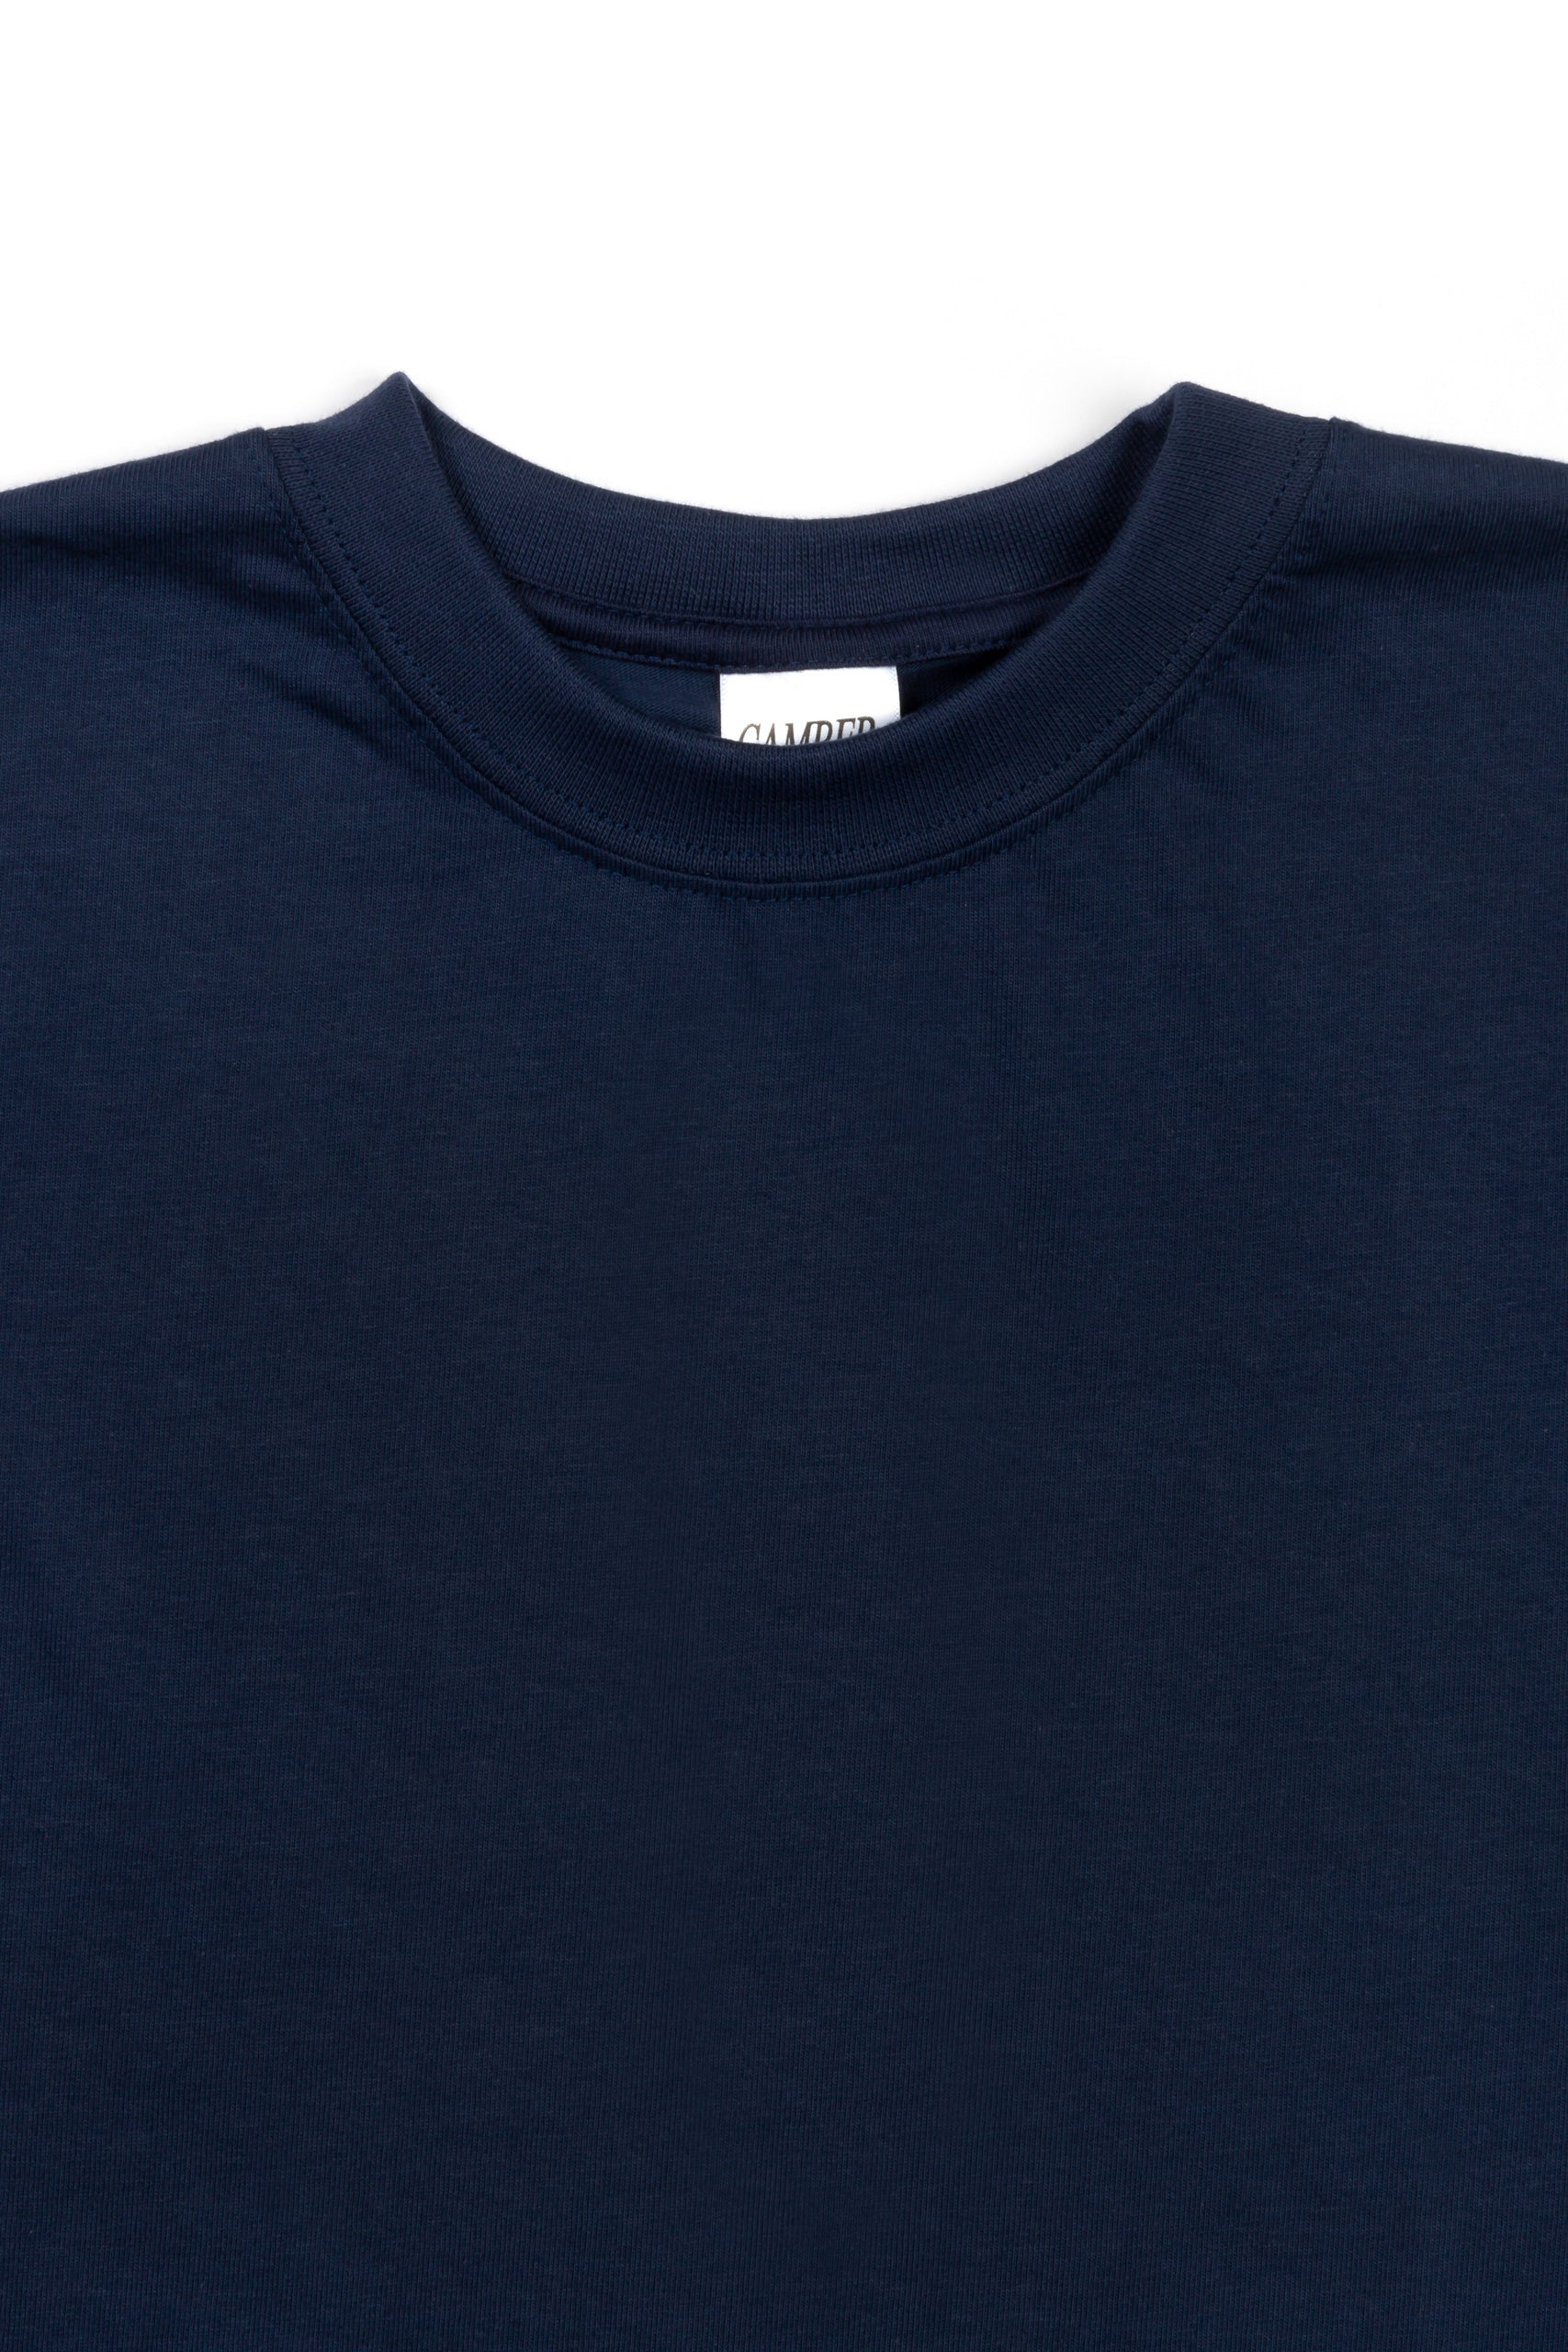 6oz 701 USA Navy – Camber T-Shirt Clothiers Embark